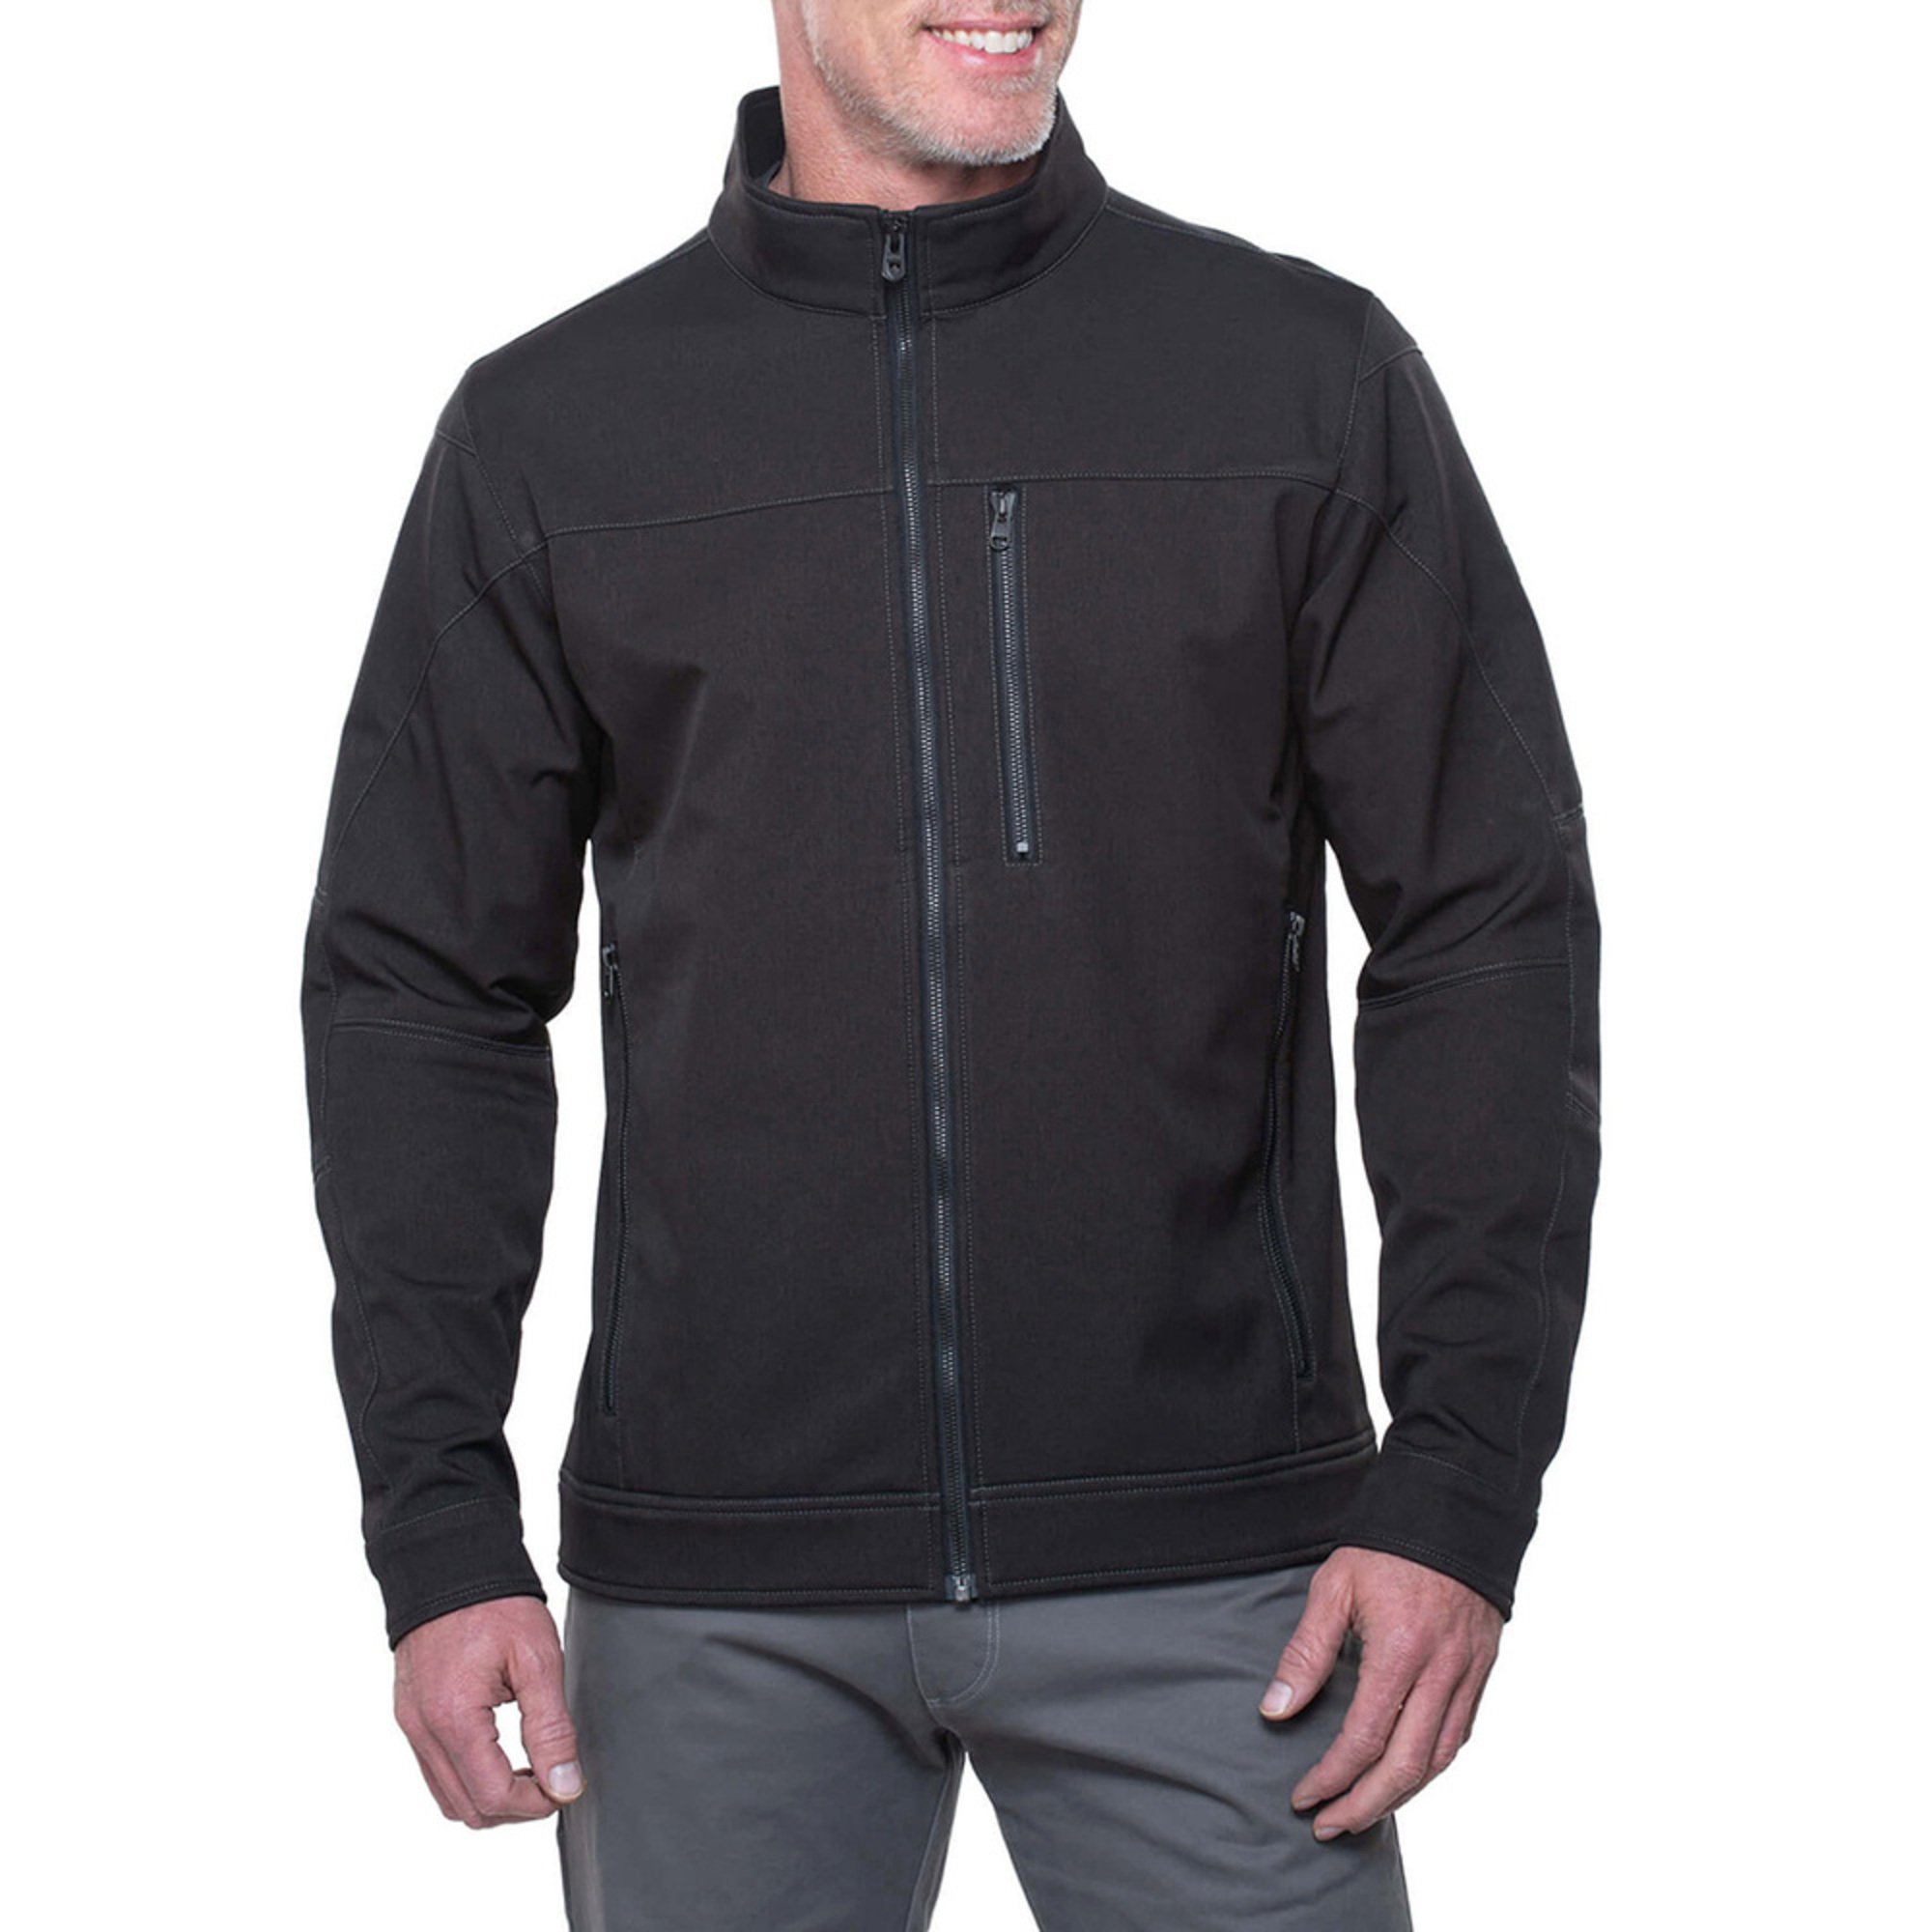 Kuhl Men's Impakt? Jacket | Men's Outerwear - Shop Your Navy Exchange ...